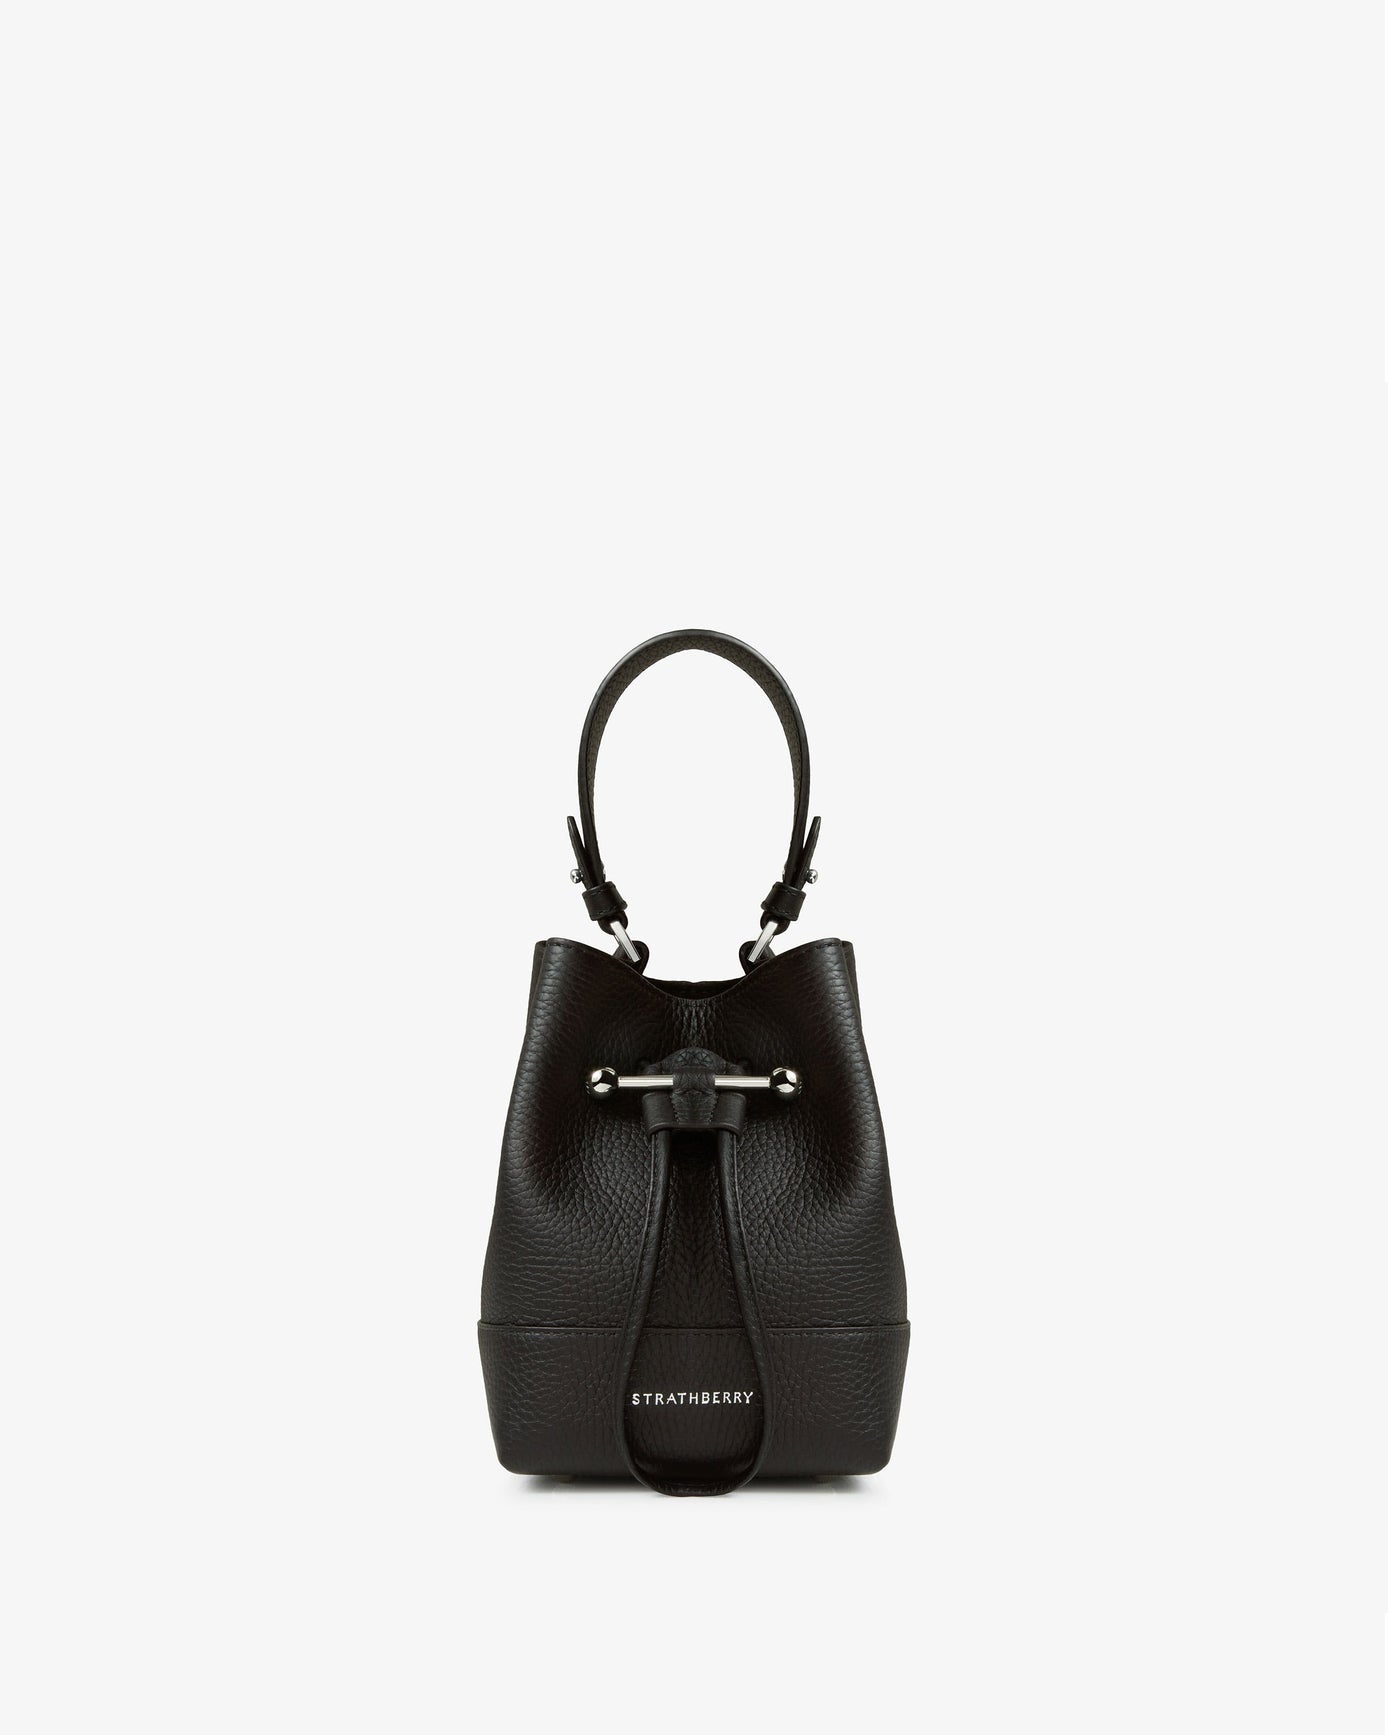 Strathberry - Lana Osette - Leather Mini Bucket Bag - Black | Strathberry